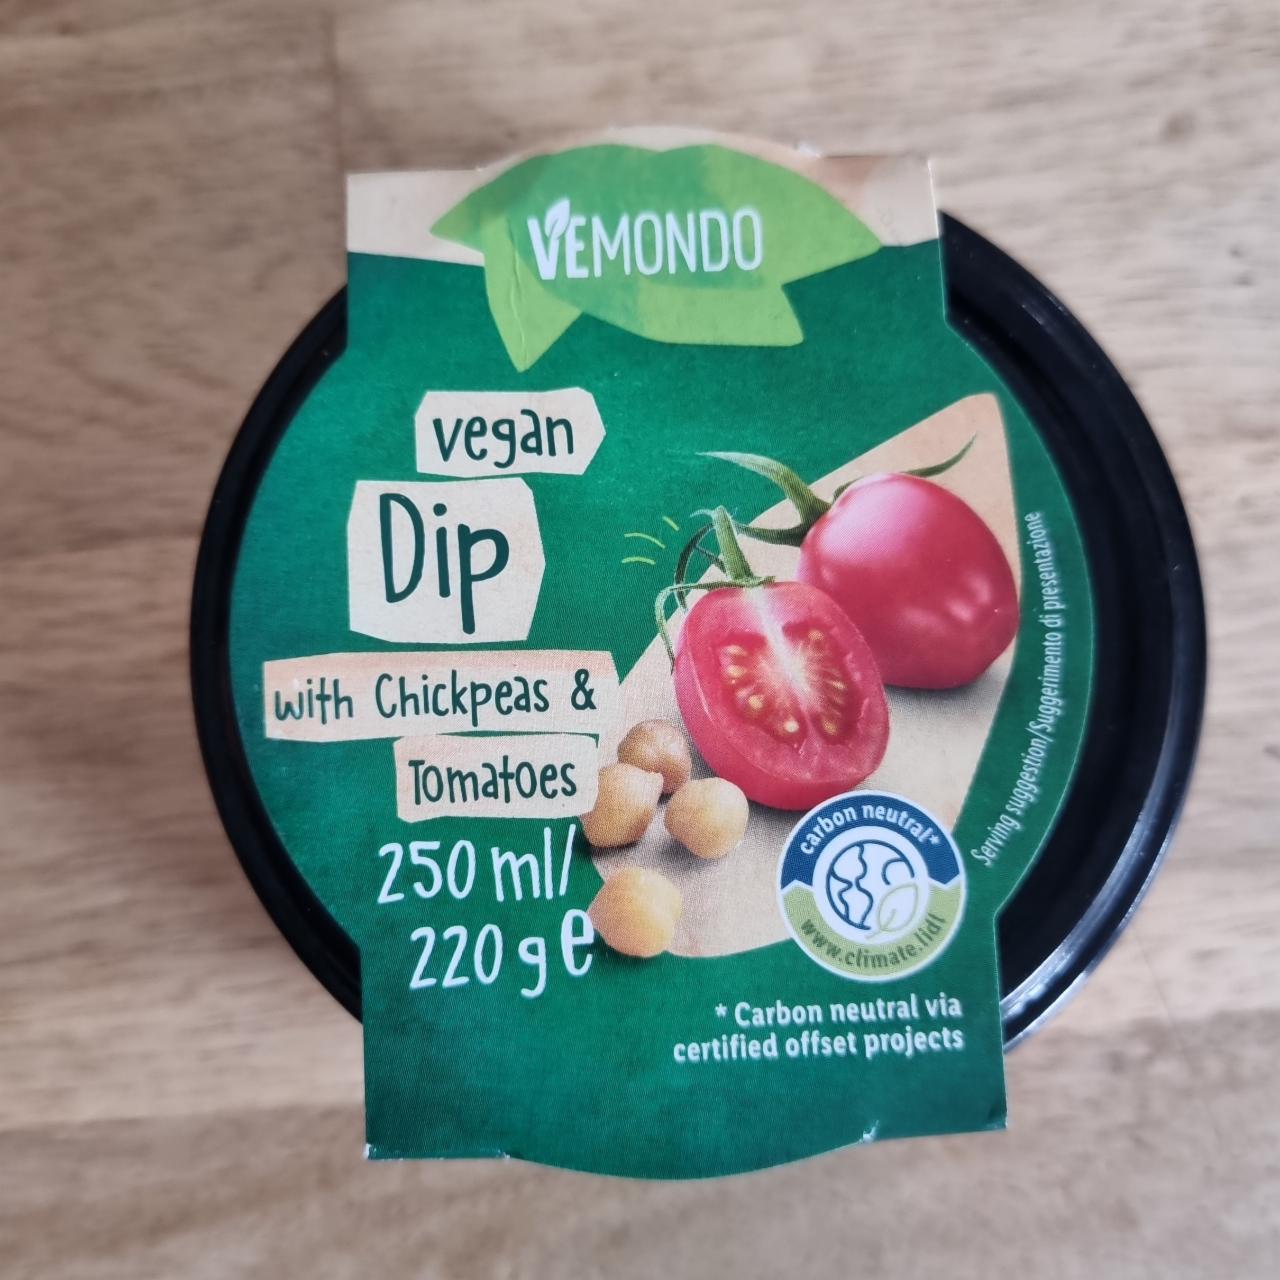 Fotografie - Vegan dip with Chickpeas & Tomatoes Vemondo